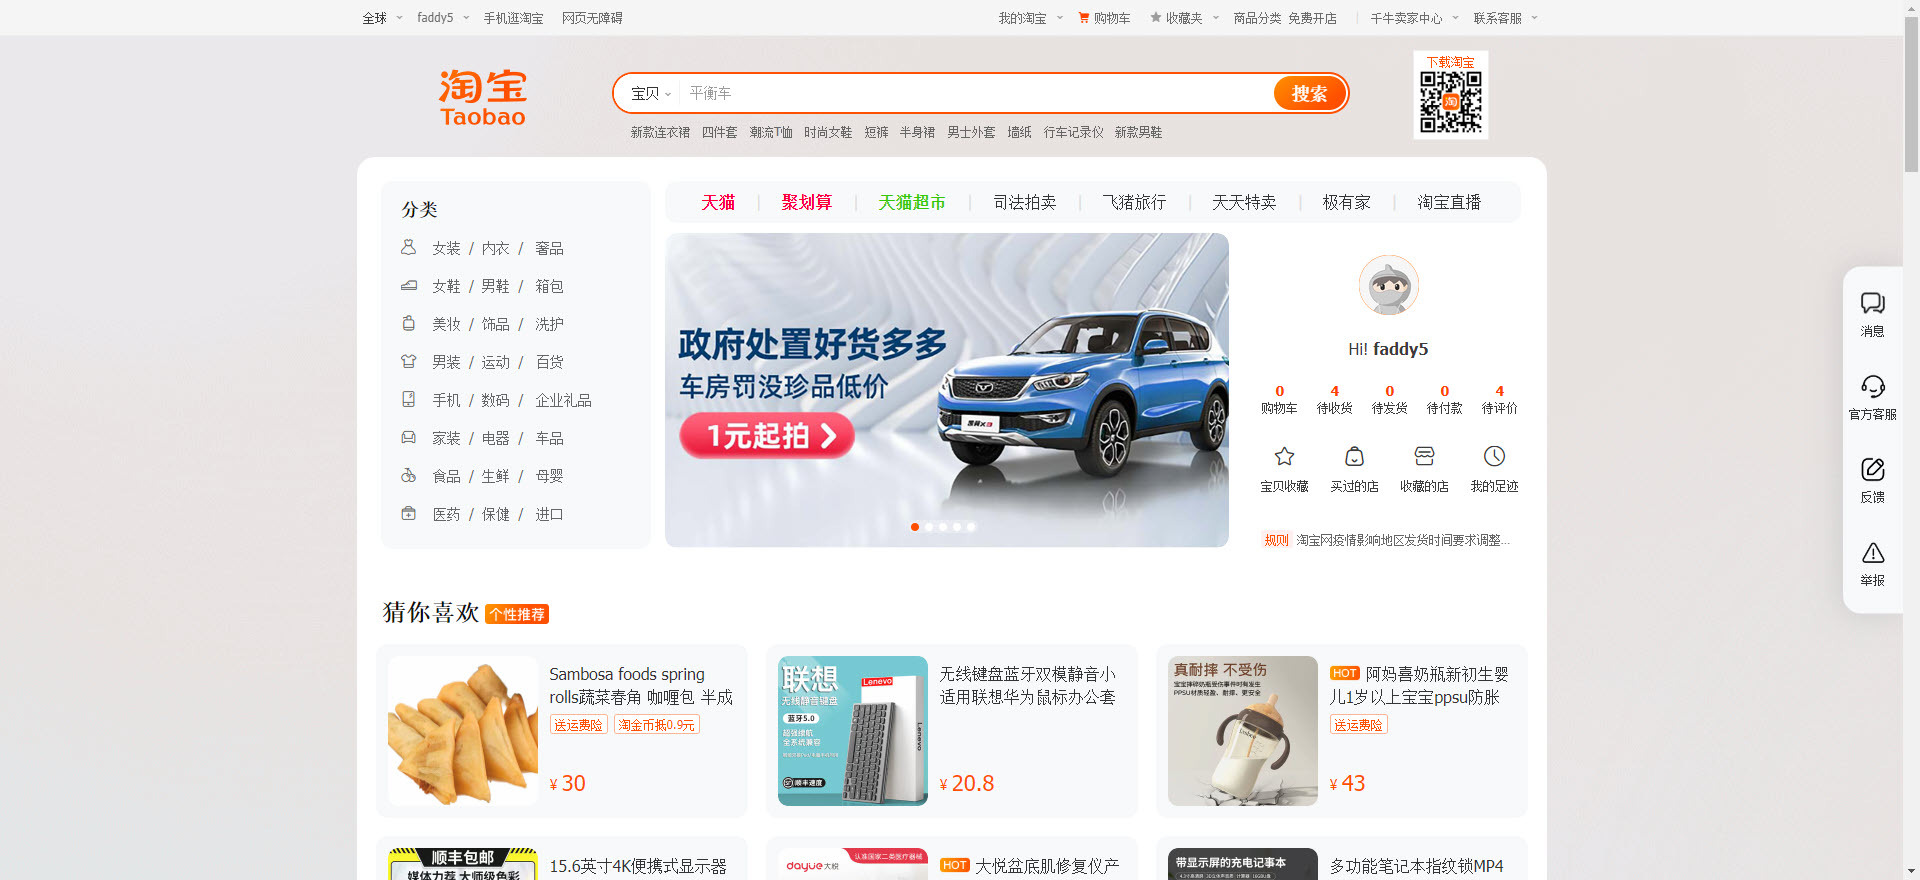 Homepage of Taobao.com 